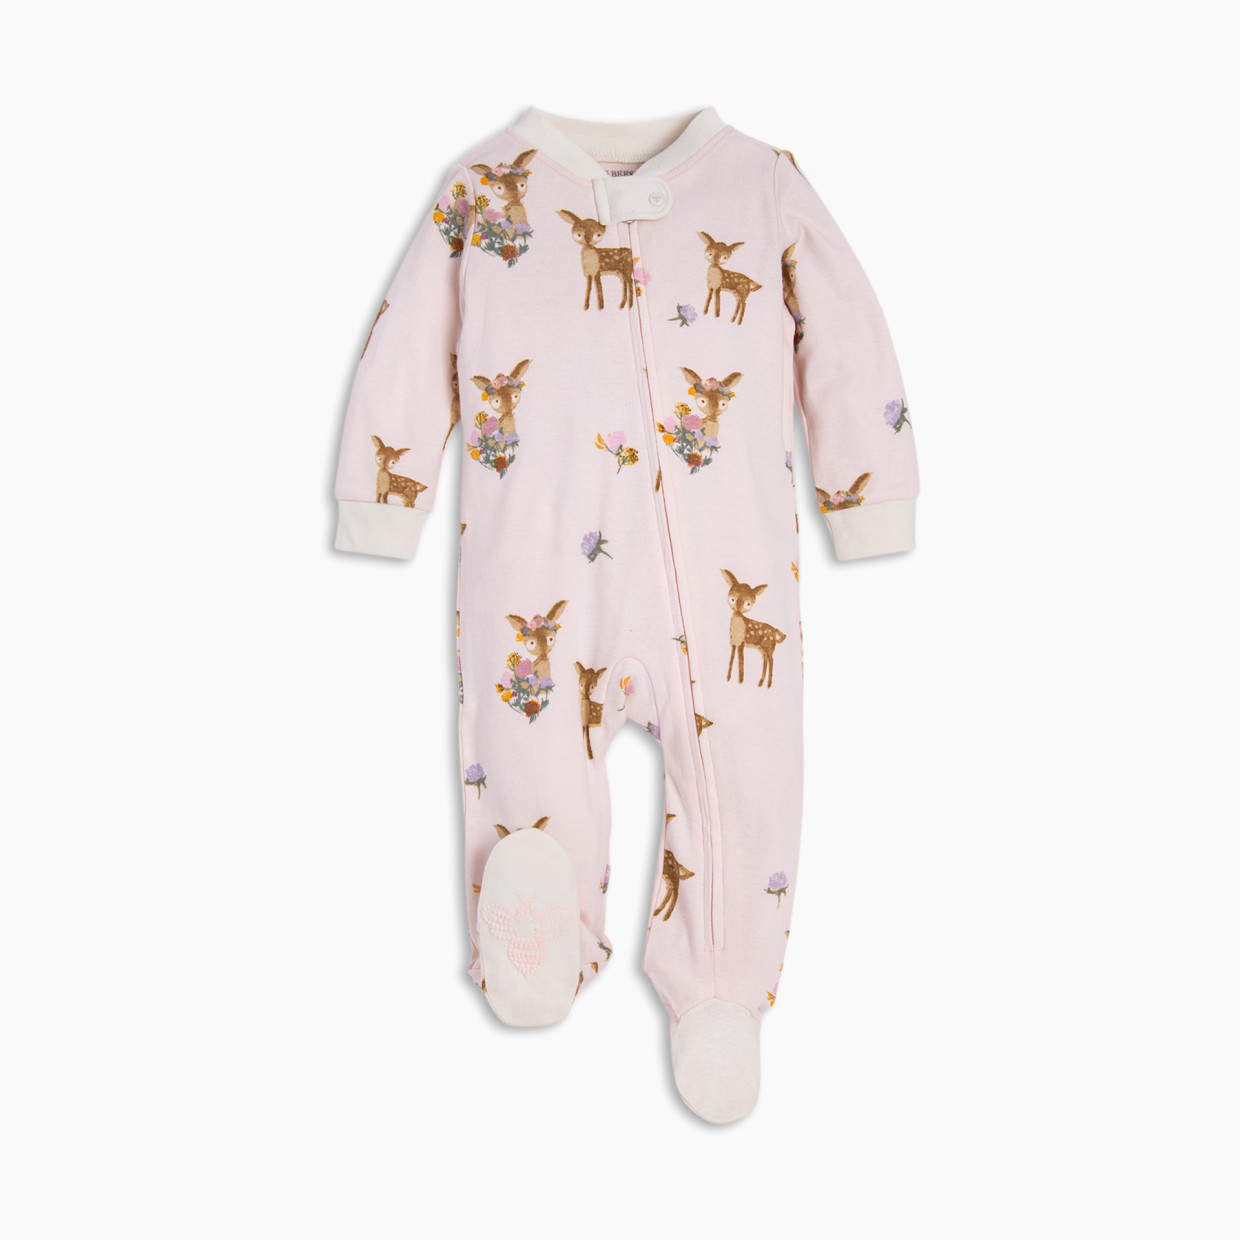 Burt's Bees Baby Organic Sleep & Play Footie Pajamas - Sweet Doe, Newborn.